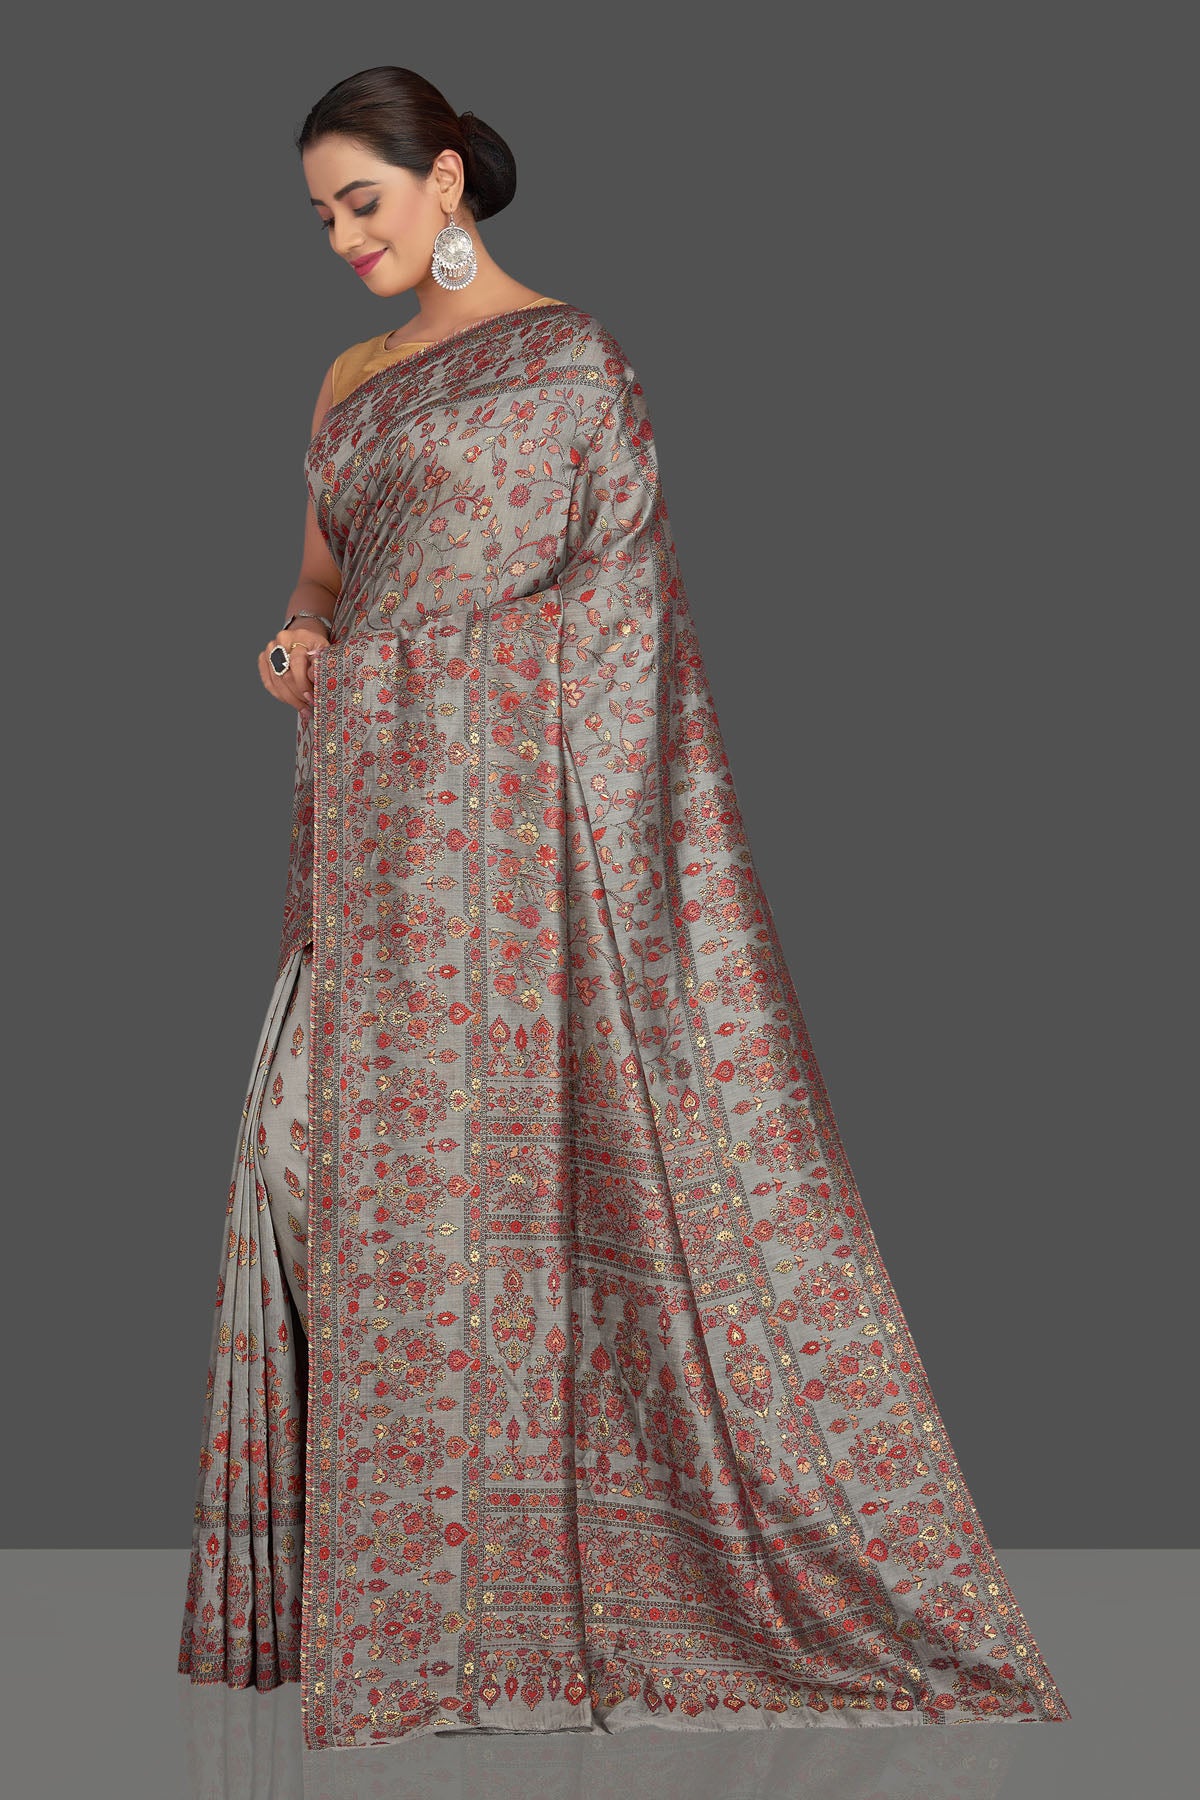 Buy stunning grey Kani weave tussar muga sari online in USA. Shop designer sarees, printed sarees, embroidered sarees, crepe sarees, handwoven silk sarees in USA from Pure Elegance Indian fashion store in USA.-pallu